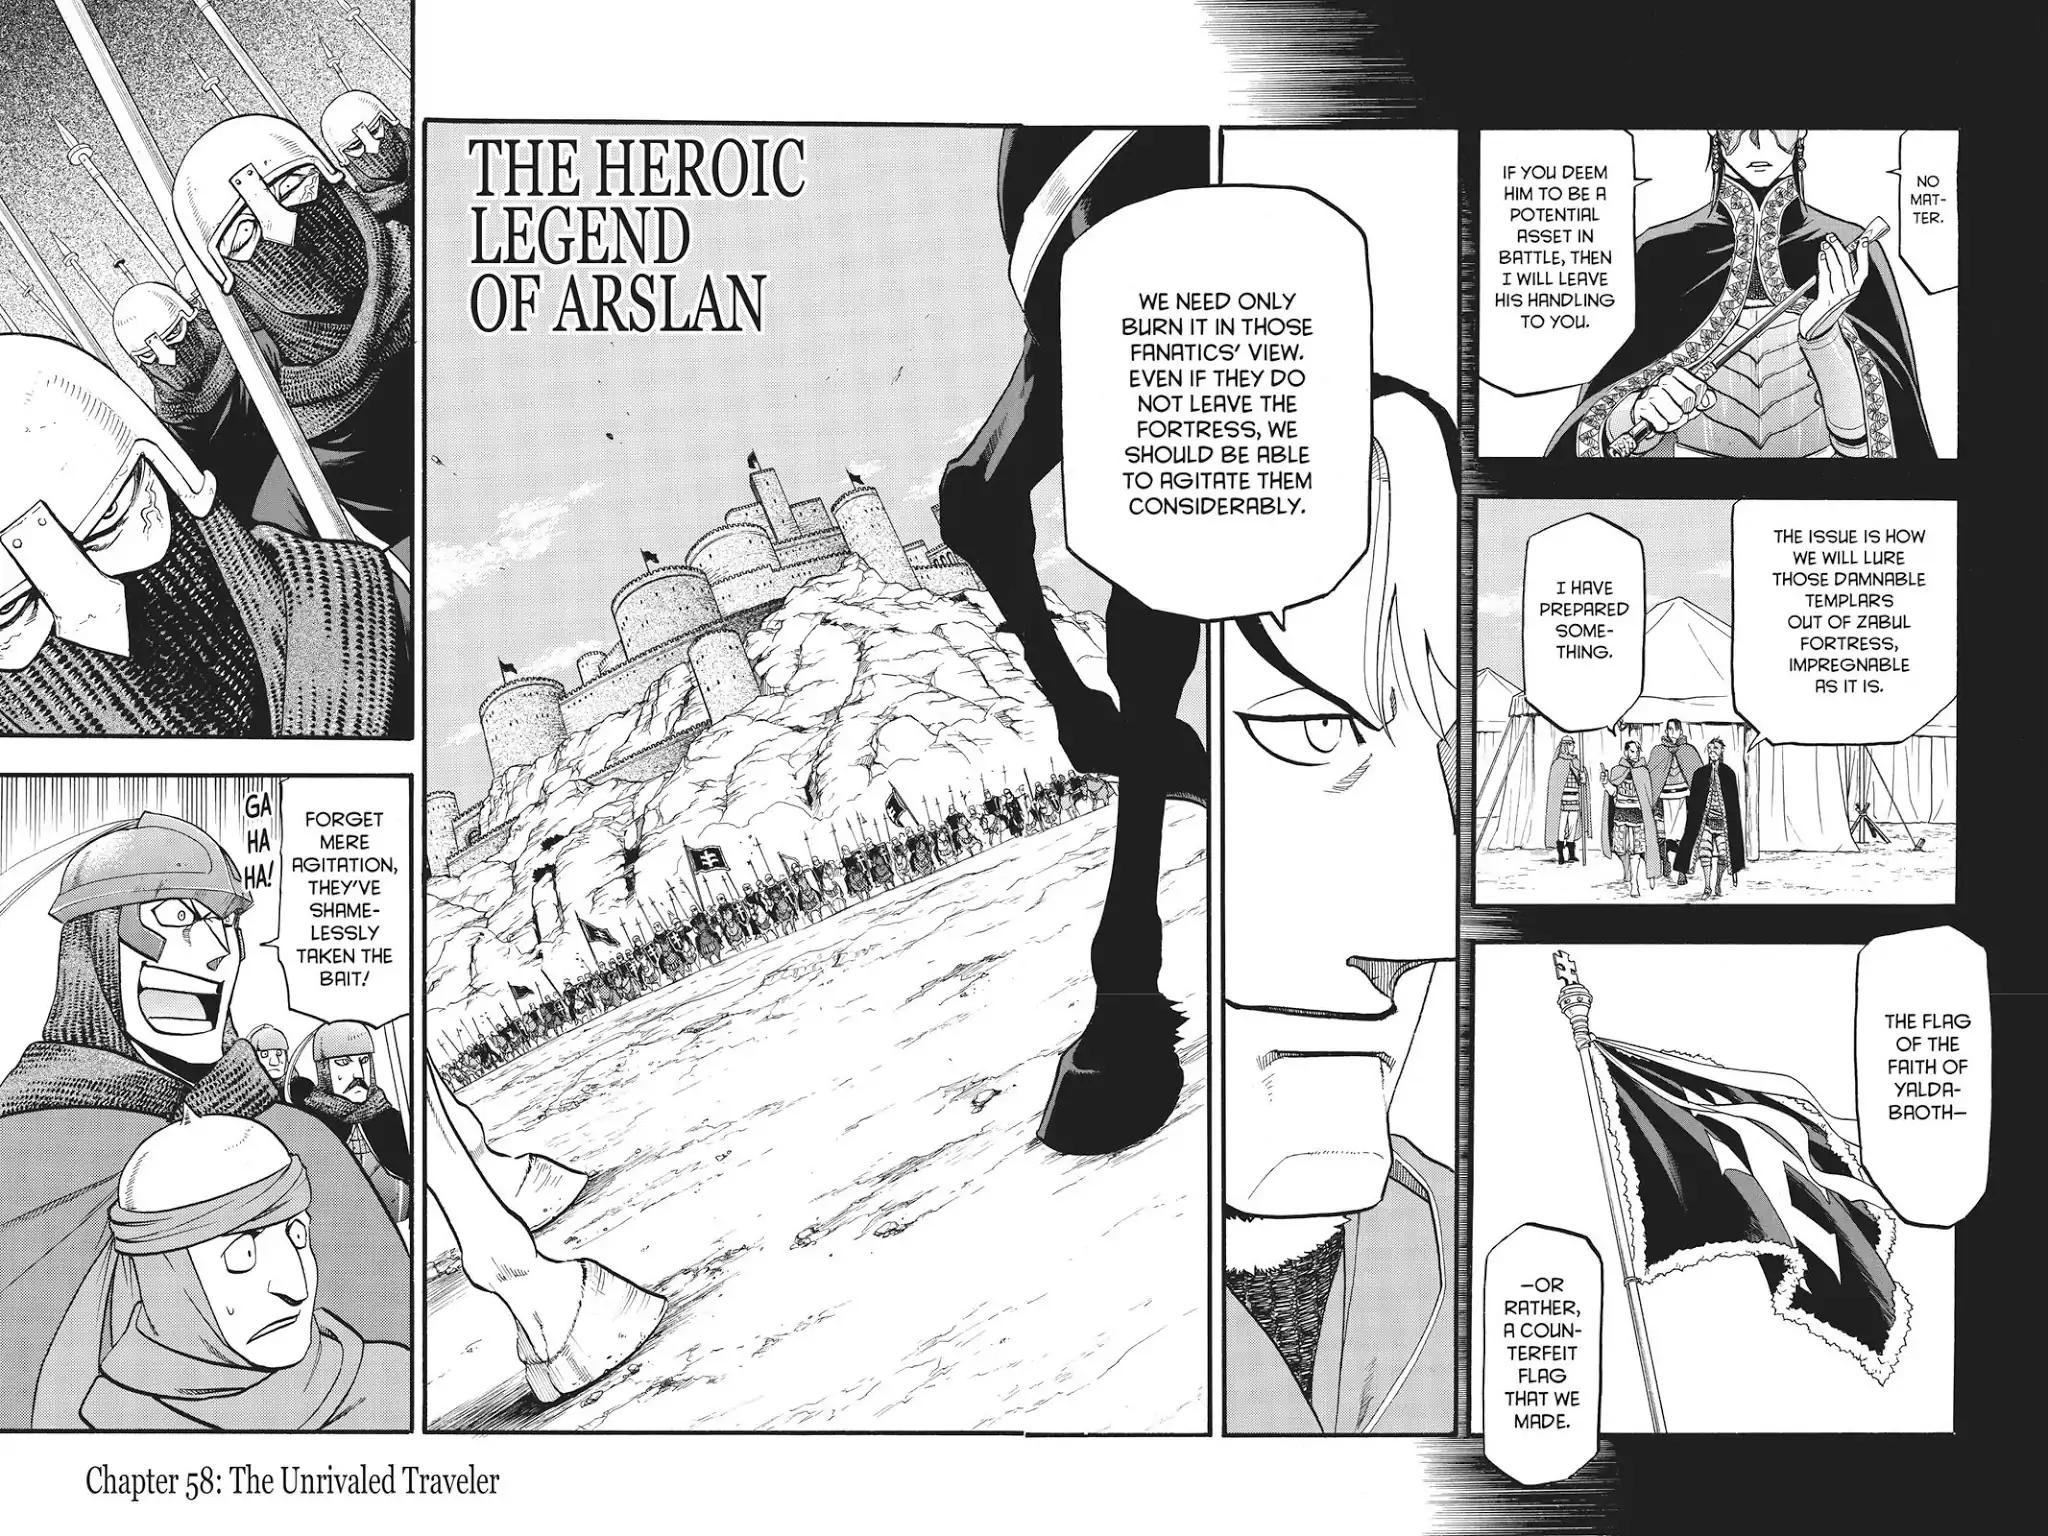 Arslan Senki (ARAKAWA Hiromu) chapter 58 page 3